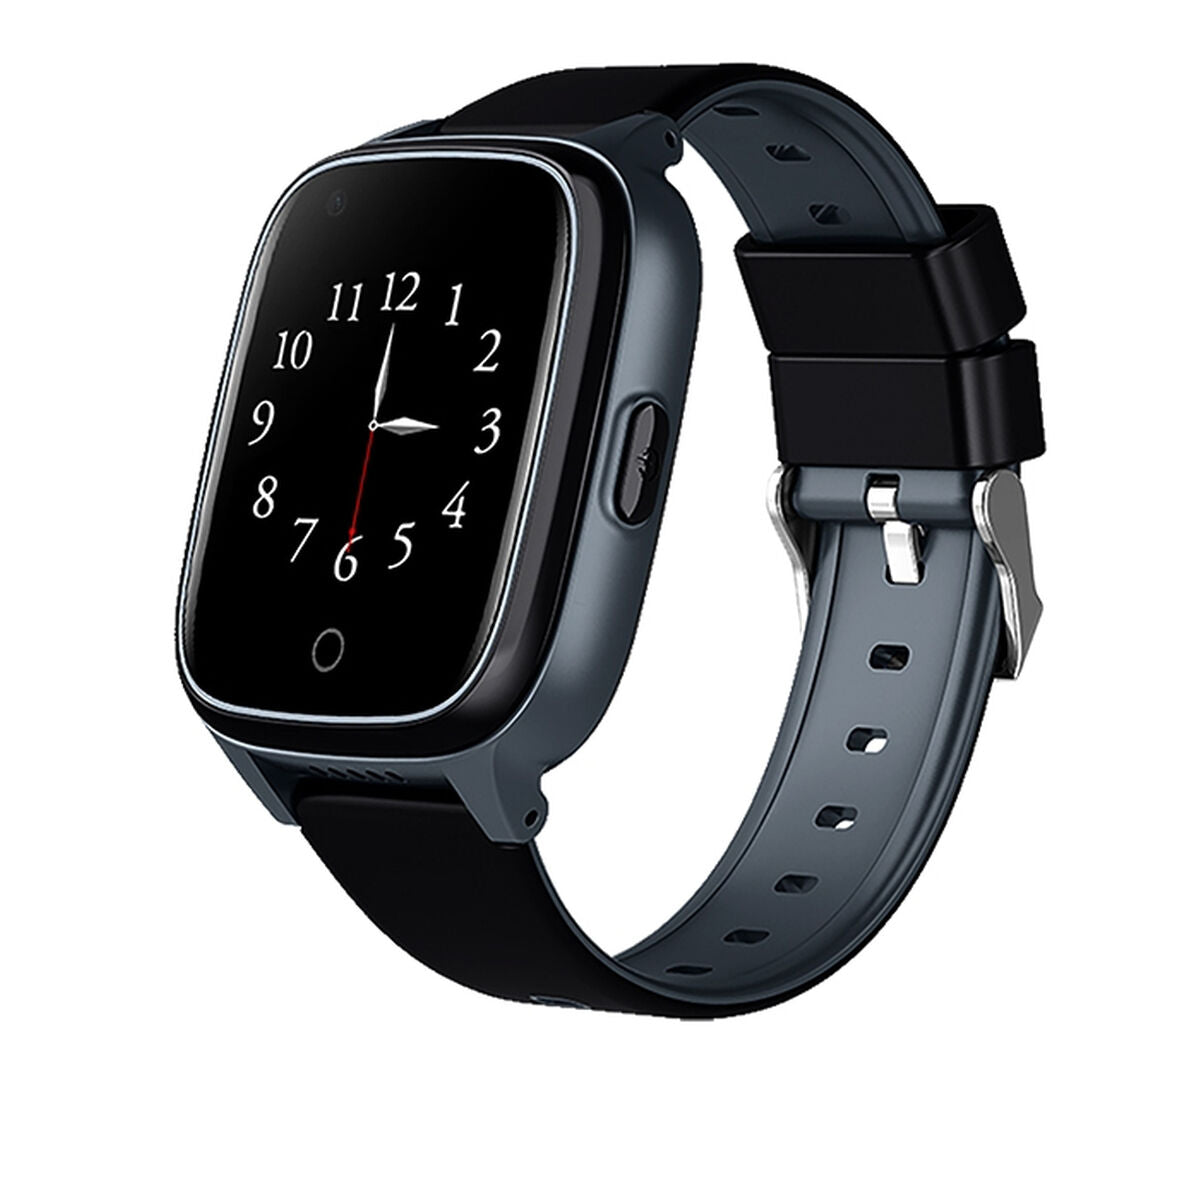 Kaufe Smartwatch Save Family RSEN4G NEGRO 1,4" bei AWK Flagship um € 109.80